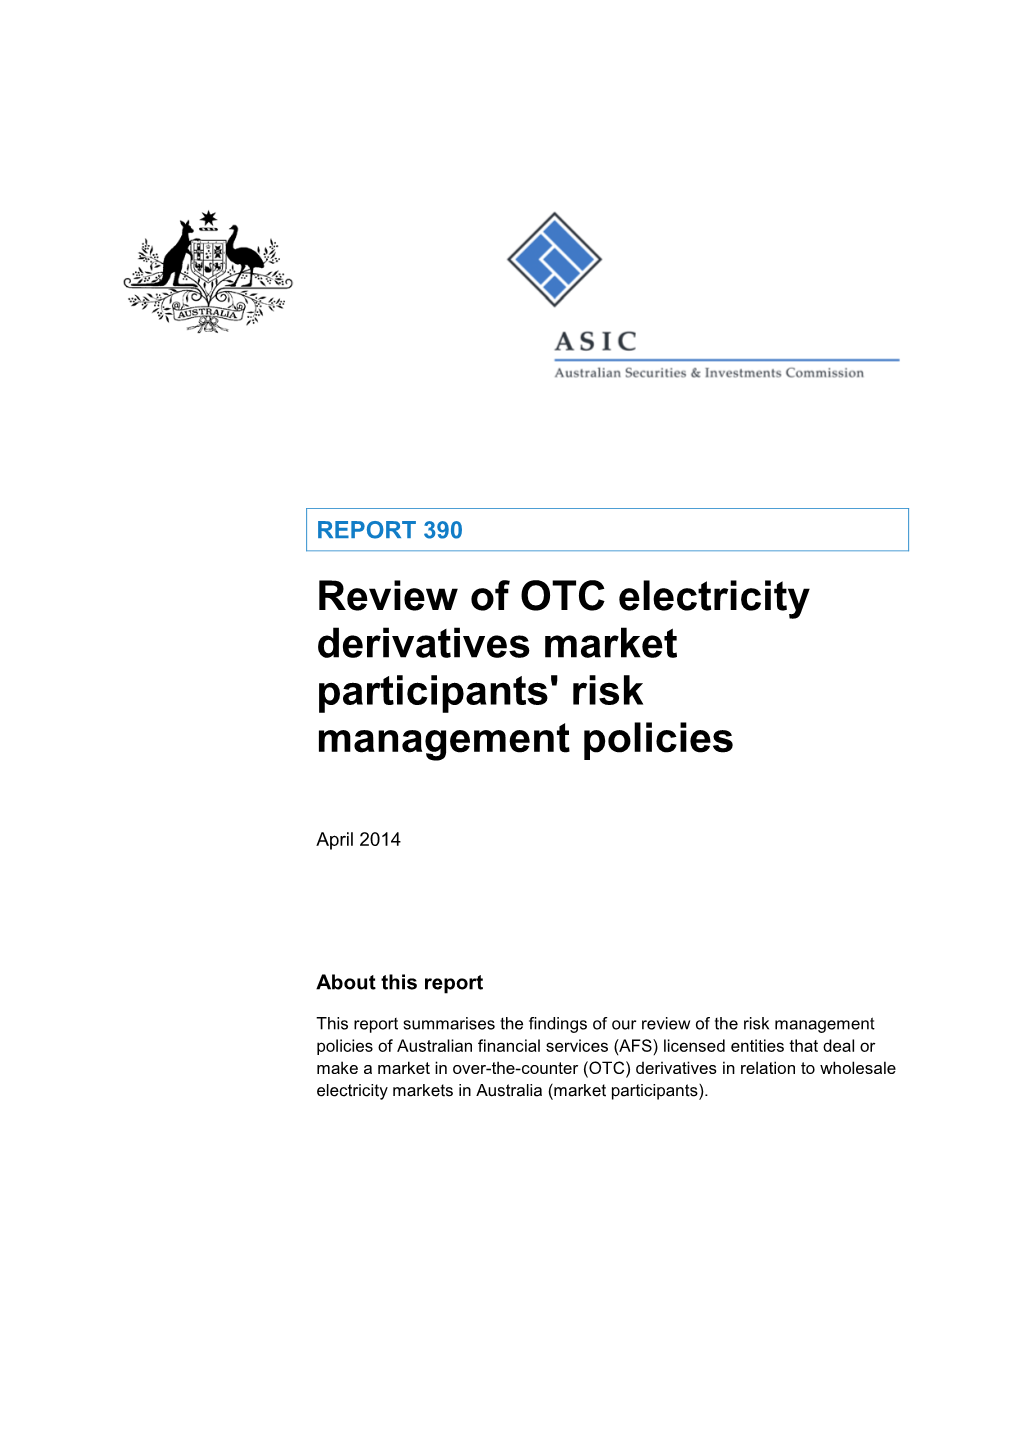 Report REP 390 Review of OTC Electricity Derivatives Market Participants' Risk Management Policies